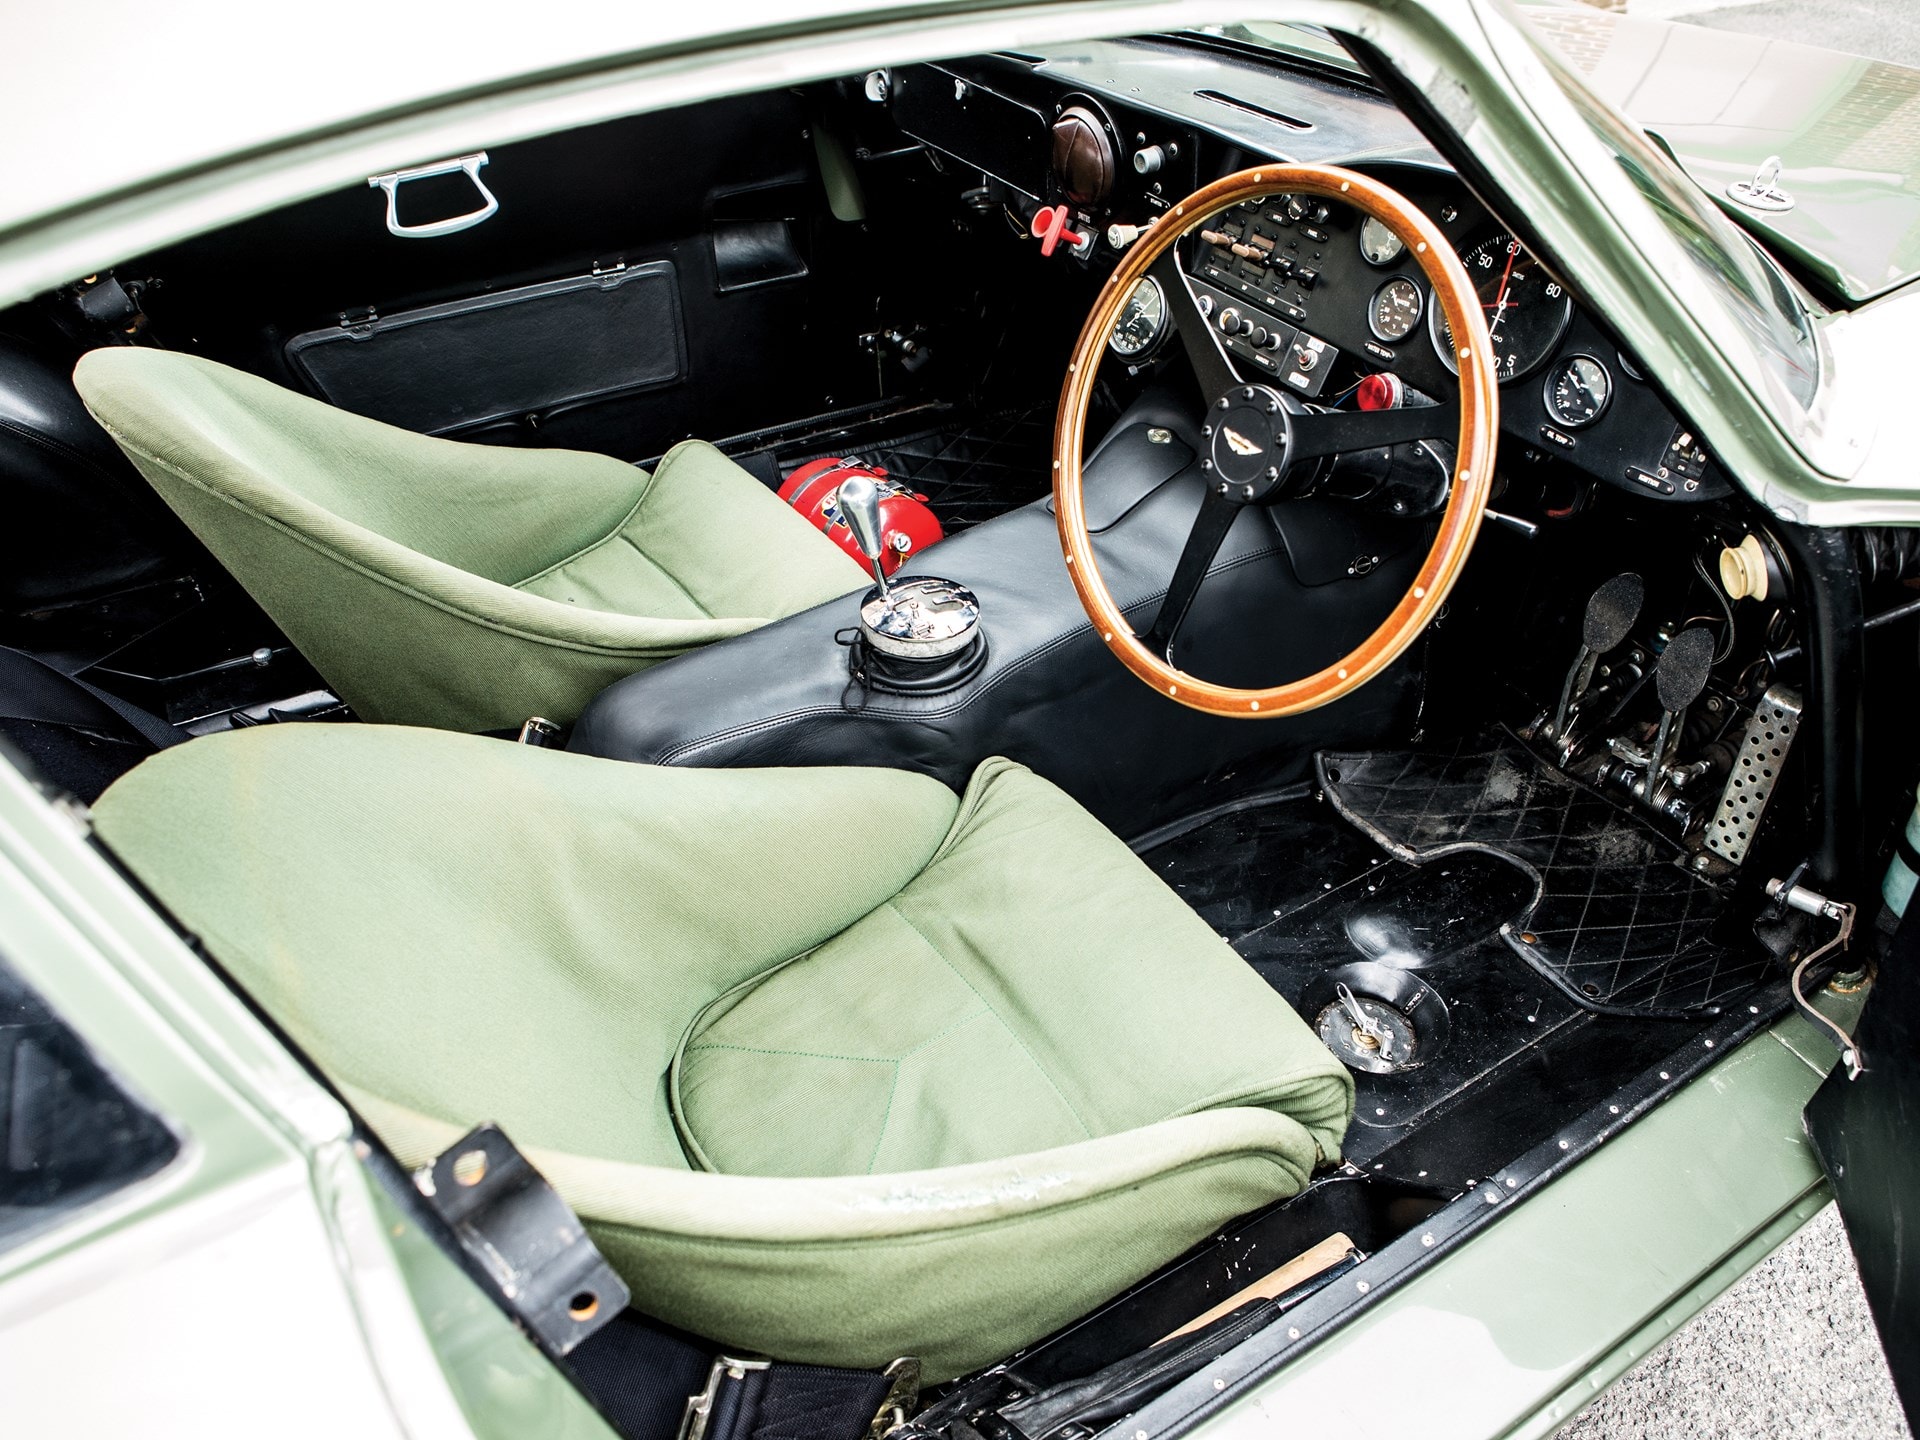 1963 Aston Martin DP215 Grand Touring Prototype Sothebys Auction 20 million usd